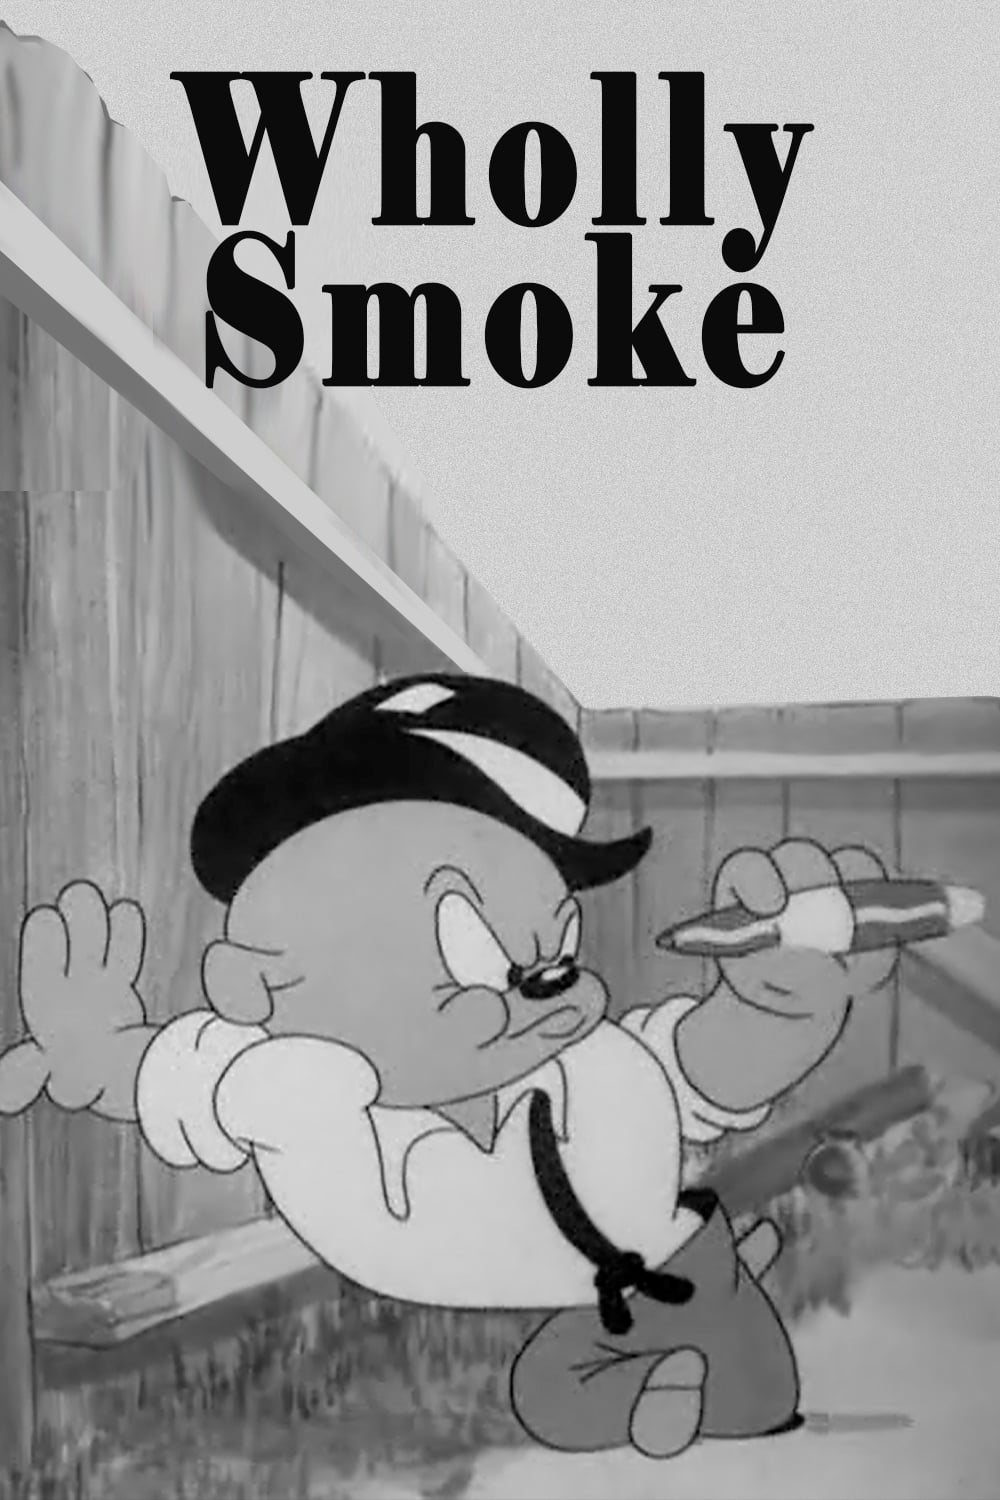 Wholly Smoke